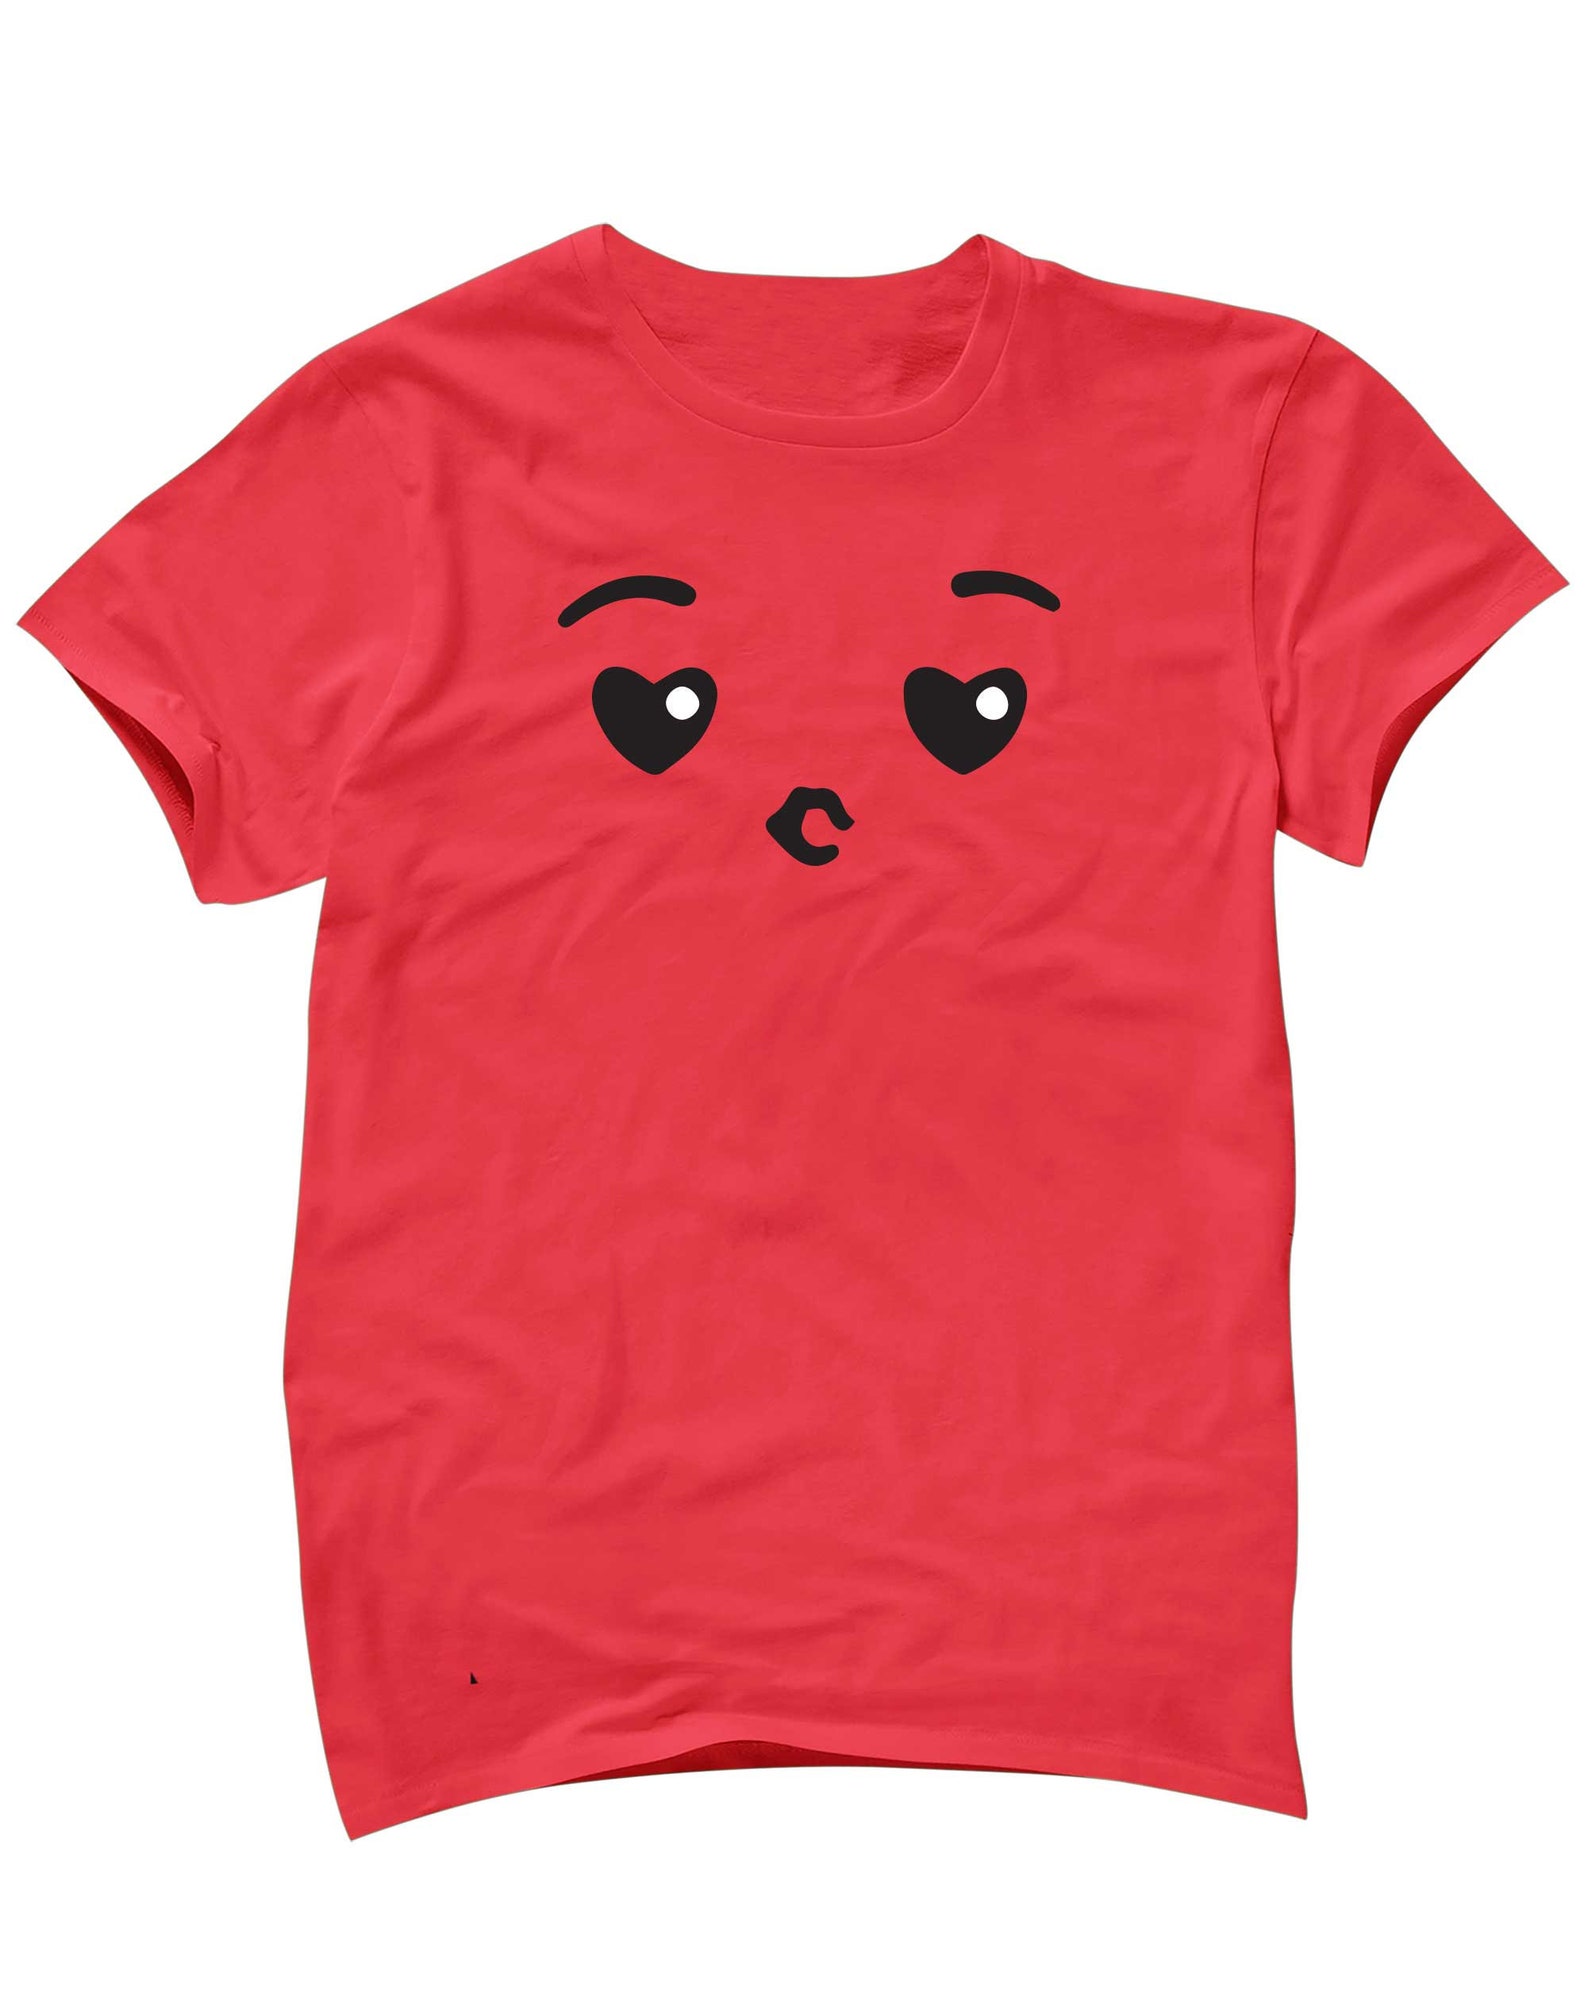 Cute Kawaii Style T-Shirt Unisex Adults & Kids Sizes Japanese | Etsy